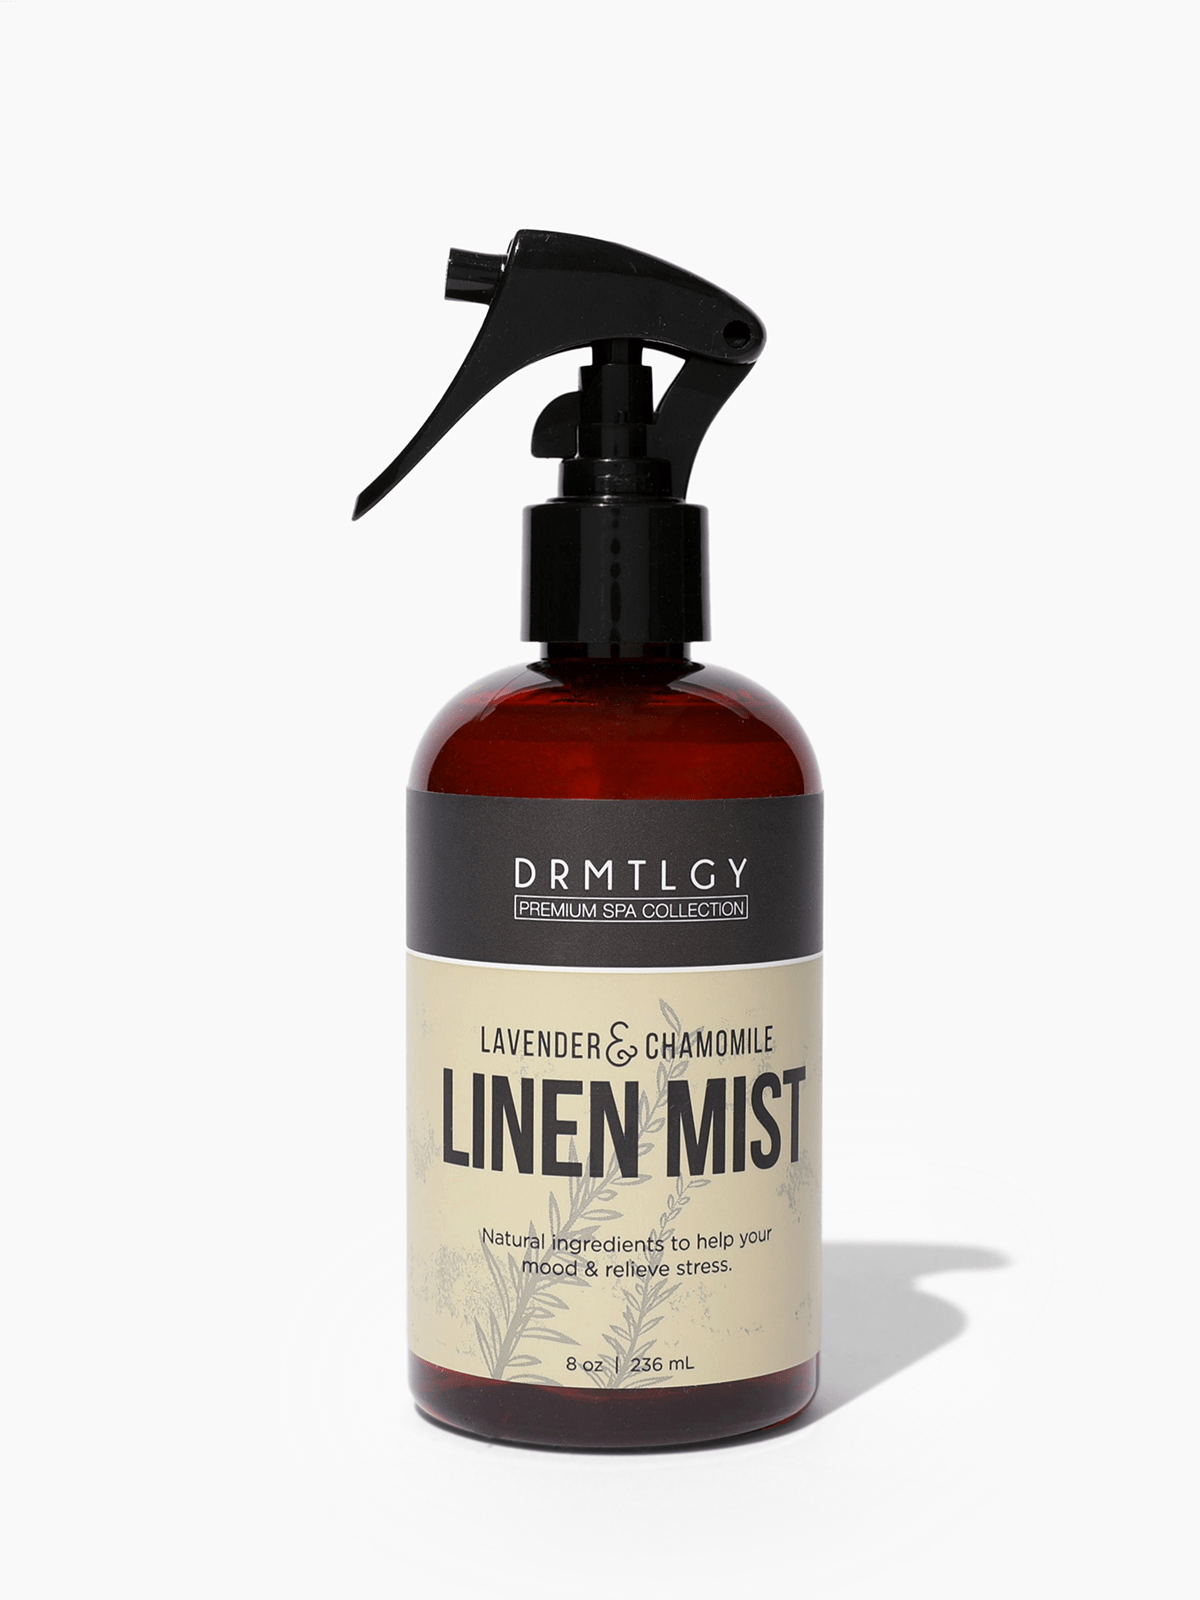 Lavender - Refreshing Body & Linen Spray